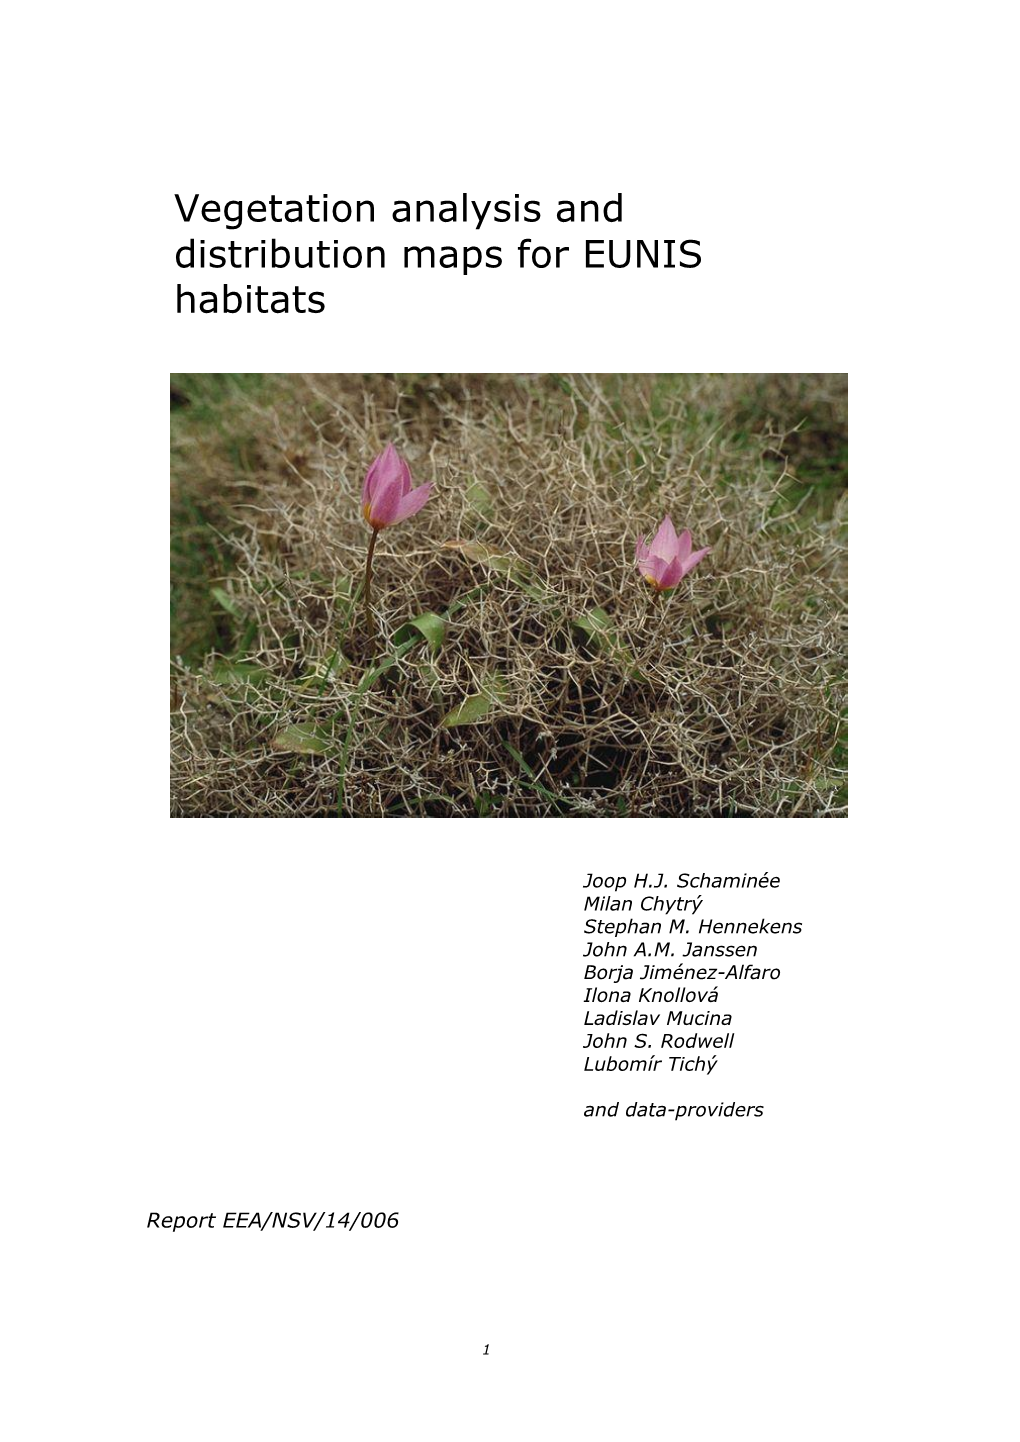 Vegetation Analysis and Distribution Maps for EUNIS Habitats